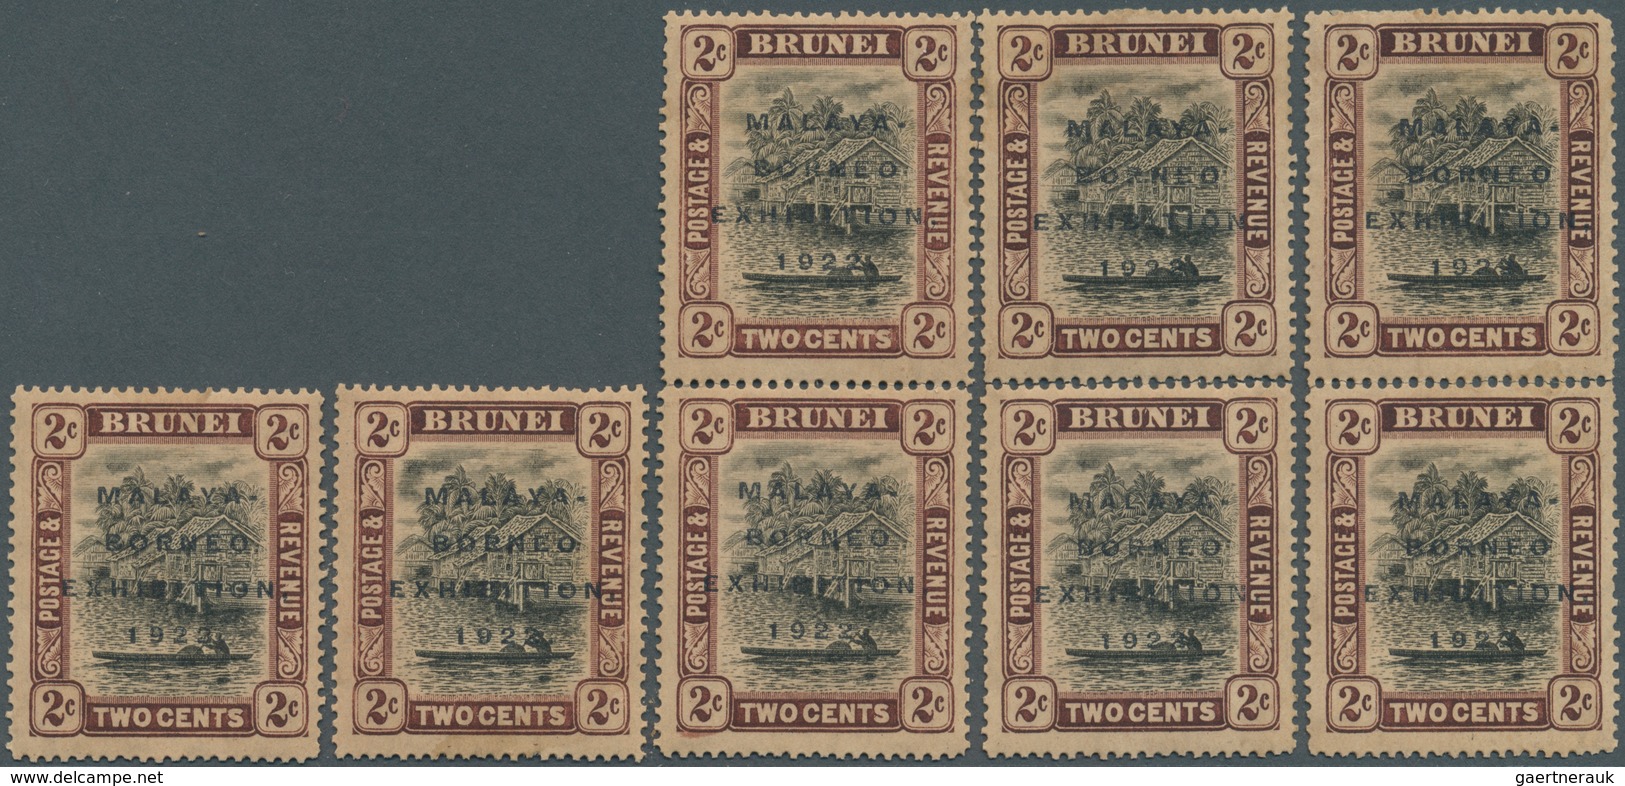 05032 Brunei: 1922 Malaya-Borneo Exhibition group of 25 mint stamps denom. 2c.(x8), 3c.(x6), 4c.(x6) and 5